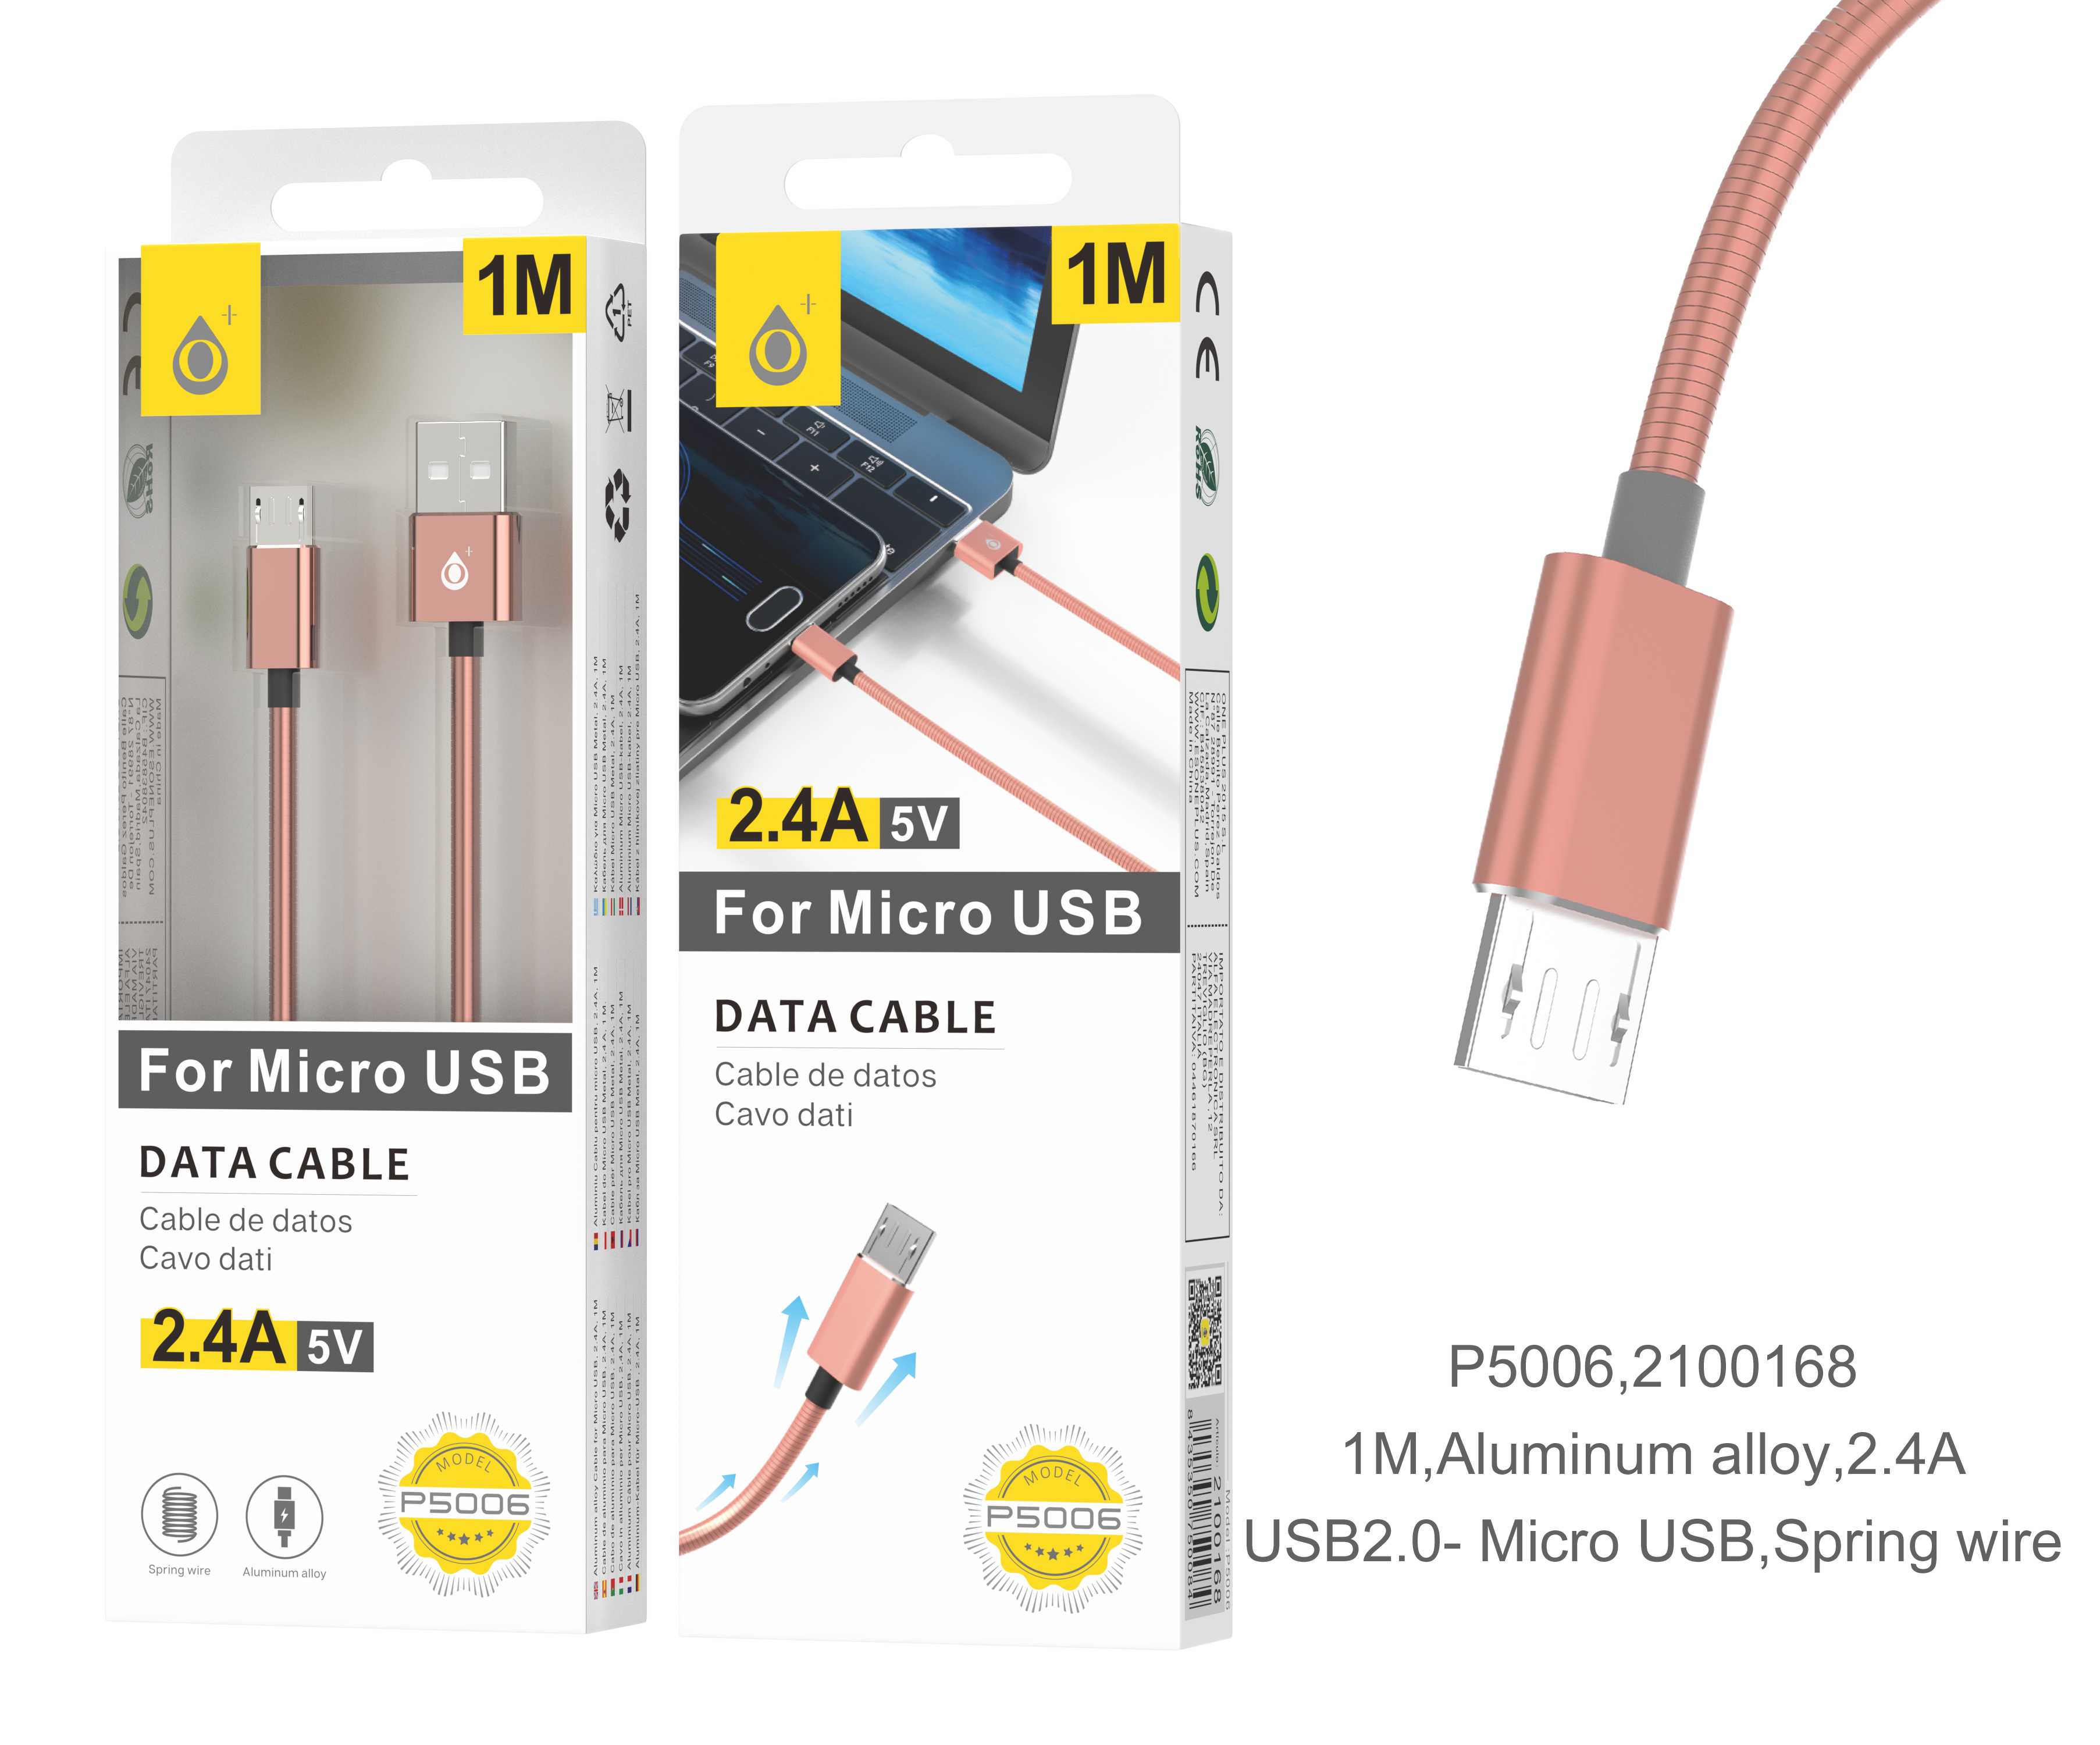 P5006 RS Cable de datos Merga Metalico para Micro USB, 2A, 1M Rosa